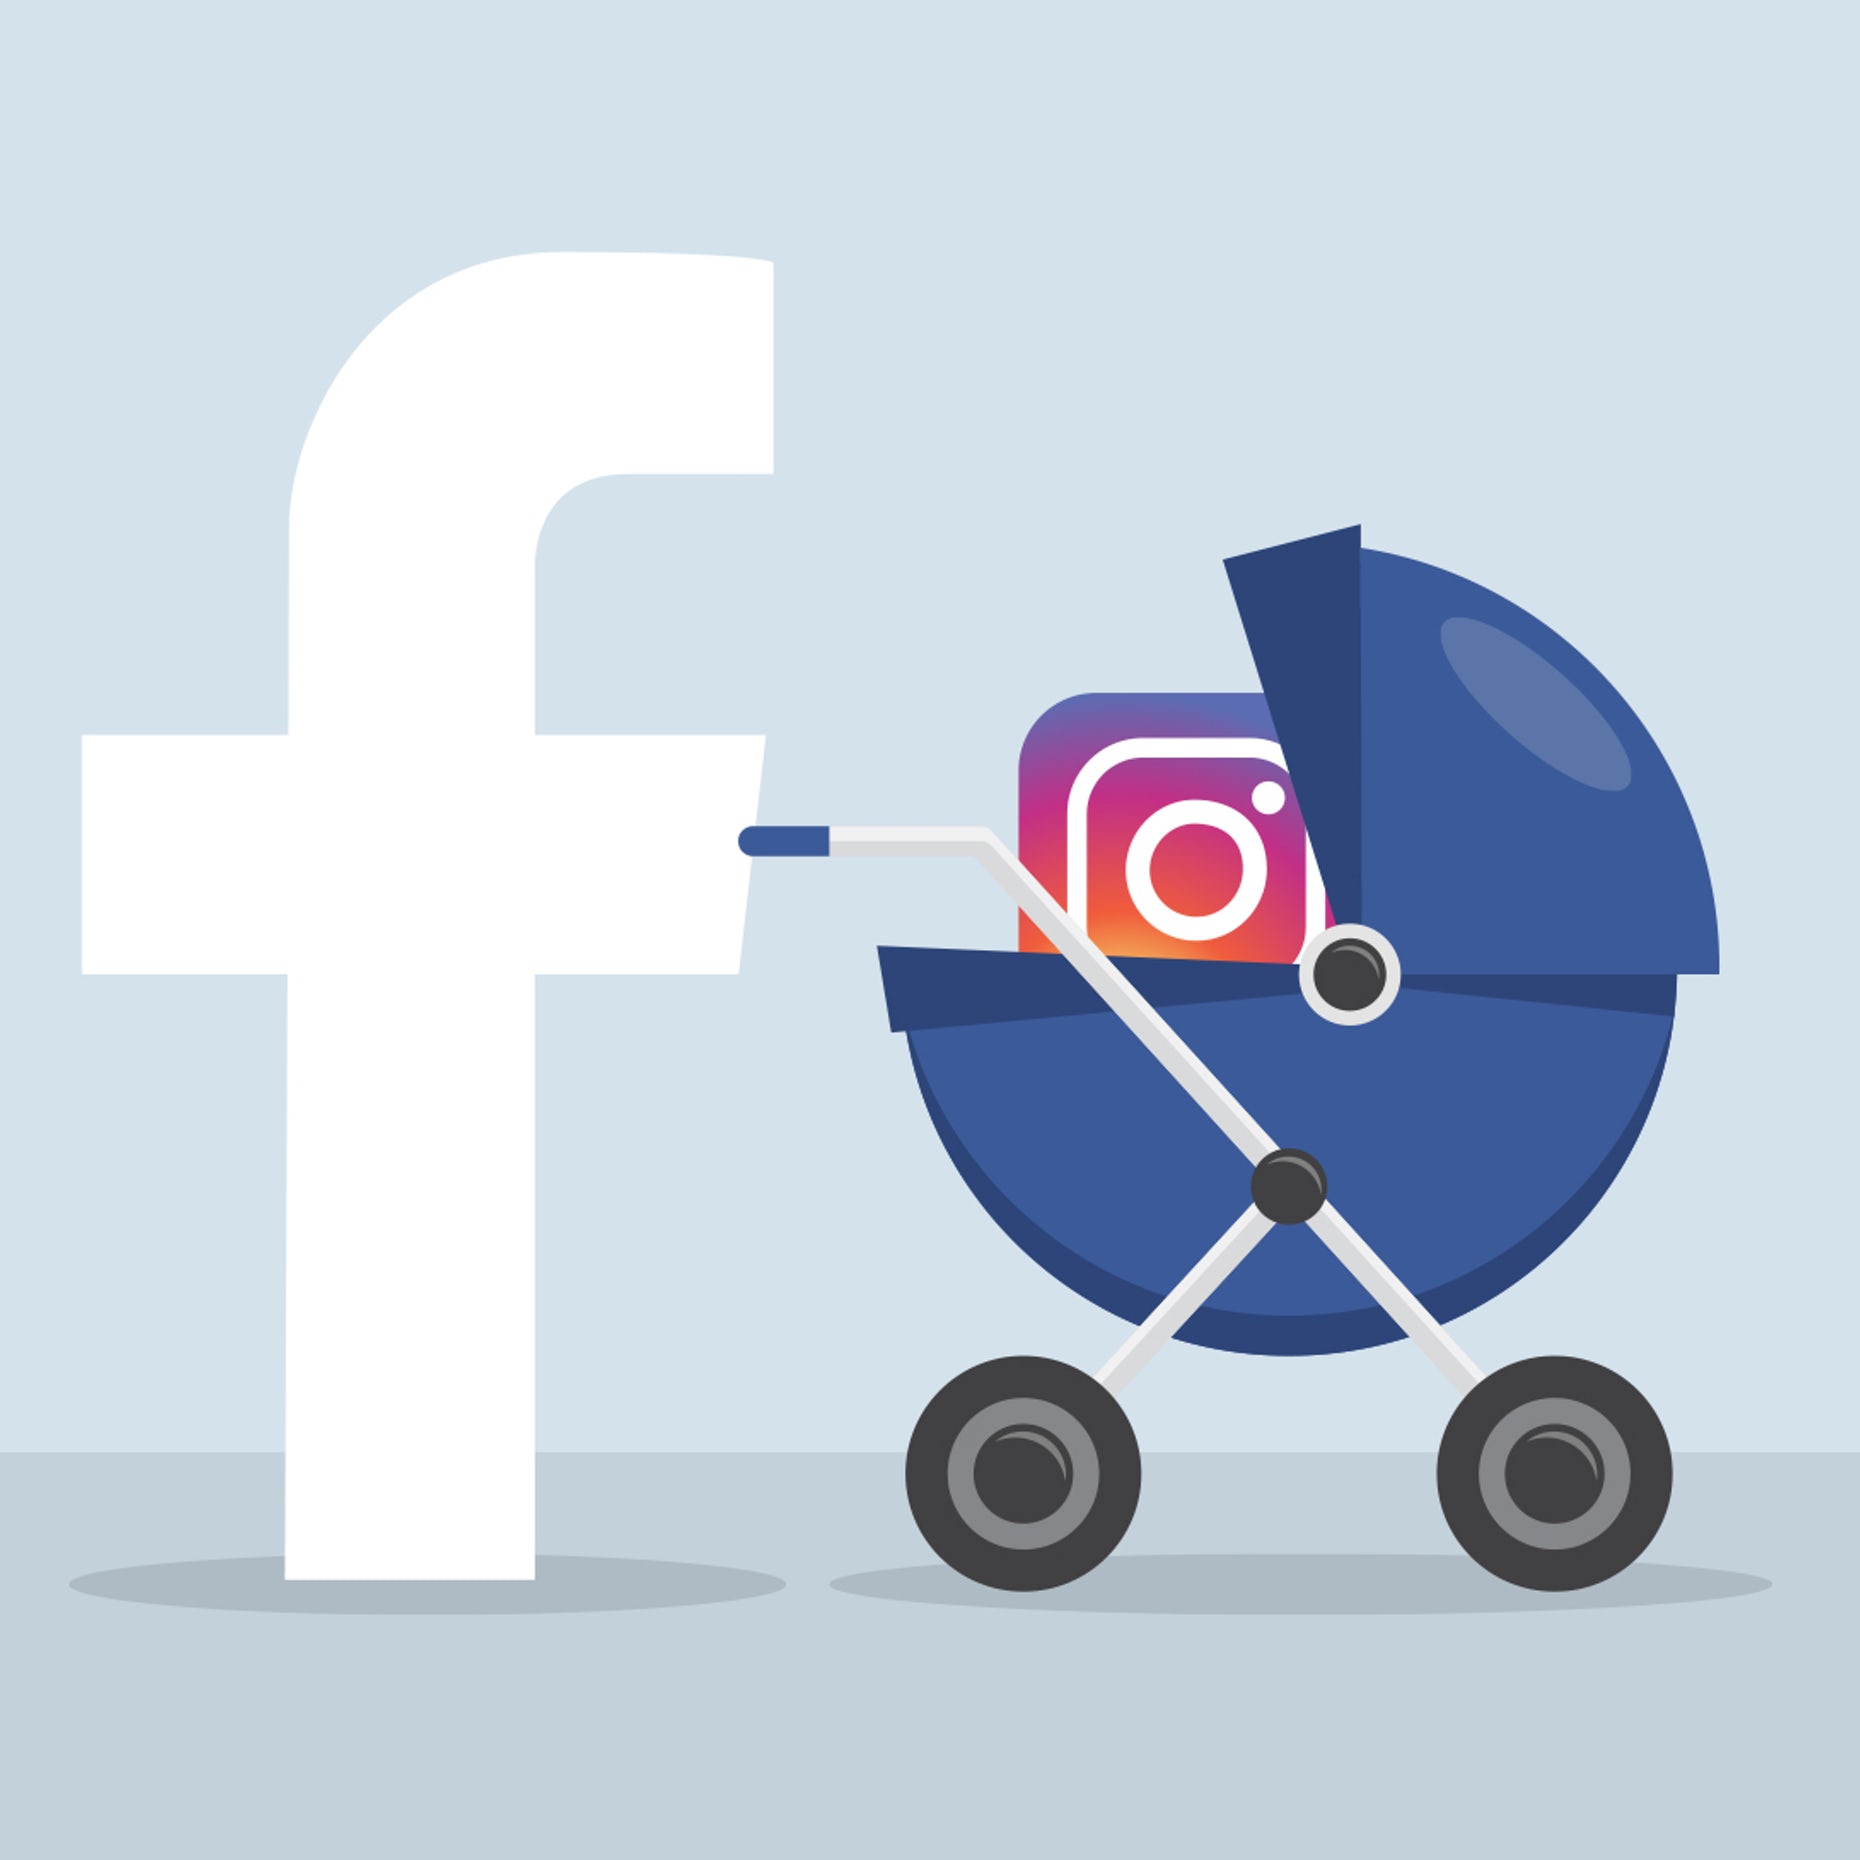 Instagram vs. facebook: what's the better marketing avenue?